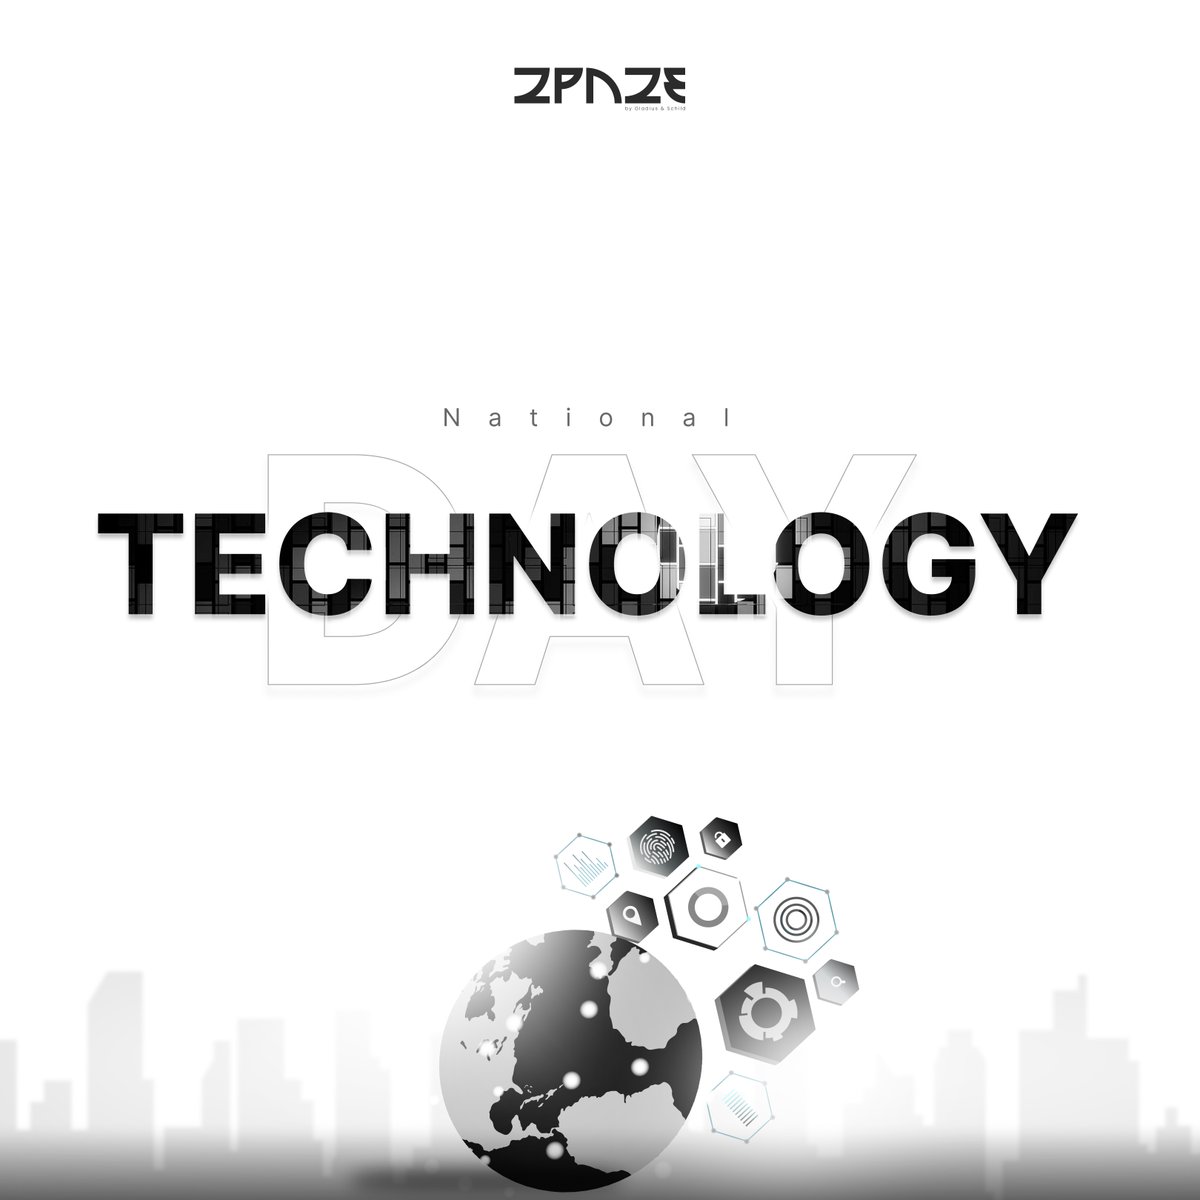 'Happy National Technology Day! 🚀💻

#NationalTechnologyDay #Innovation #TechAdvancements #DigitalTransformation #TechnologyInnovations #TechCommunity #FutureForward